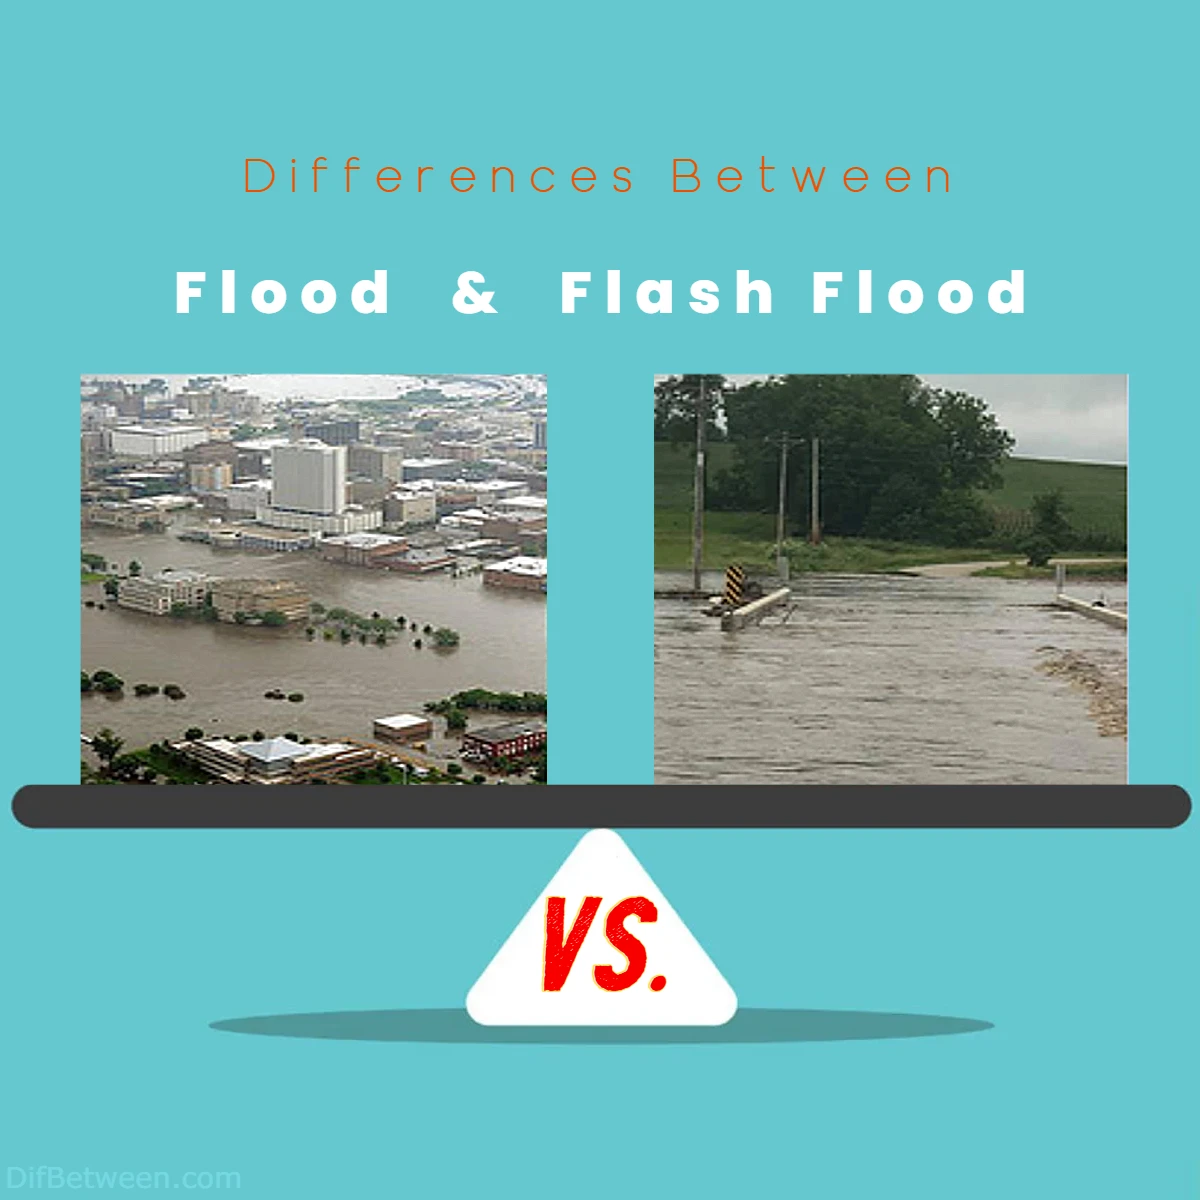 Differences Between Flood vs Flash Flood